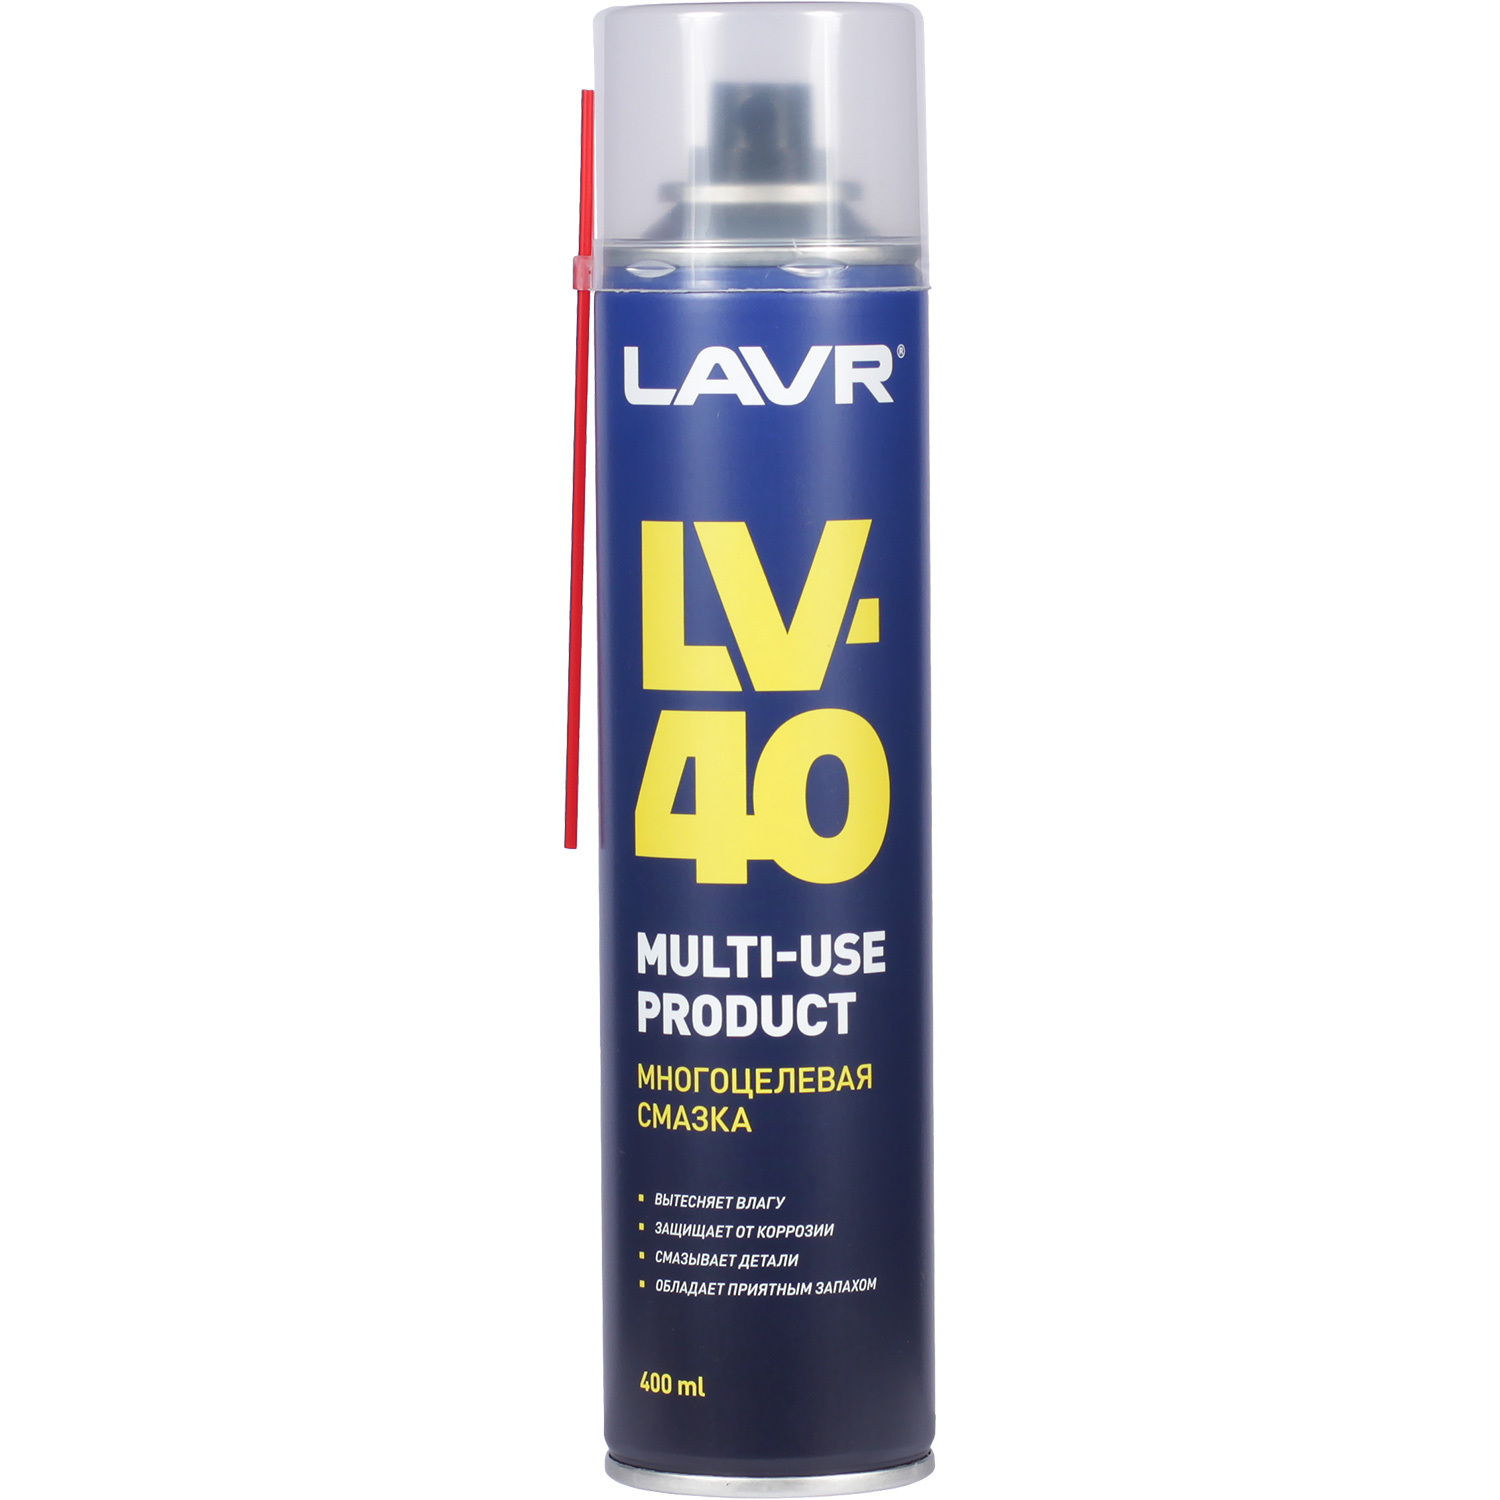 Lavr Многоцелевая смазка LV-40 LAVR Ln 1485 lavr многоцелевая смазка lv 40 lavr ln 1484